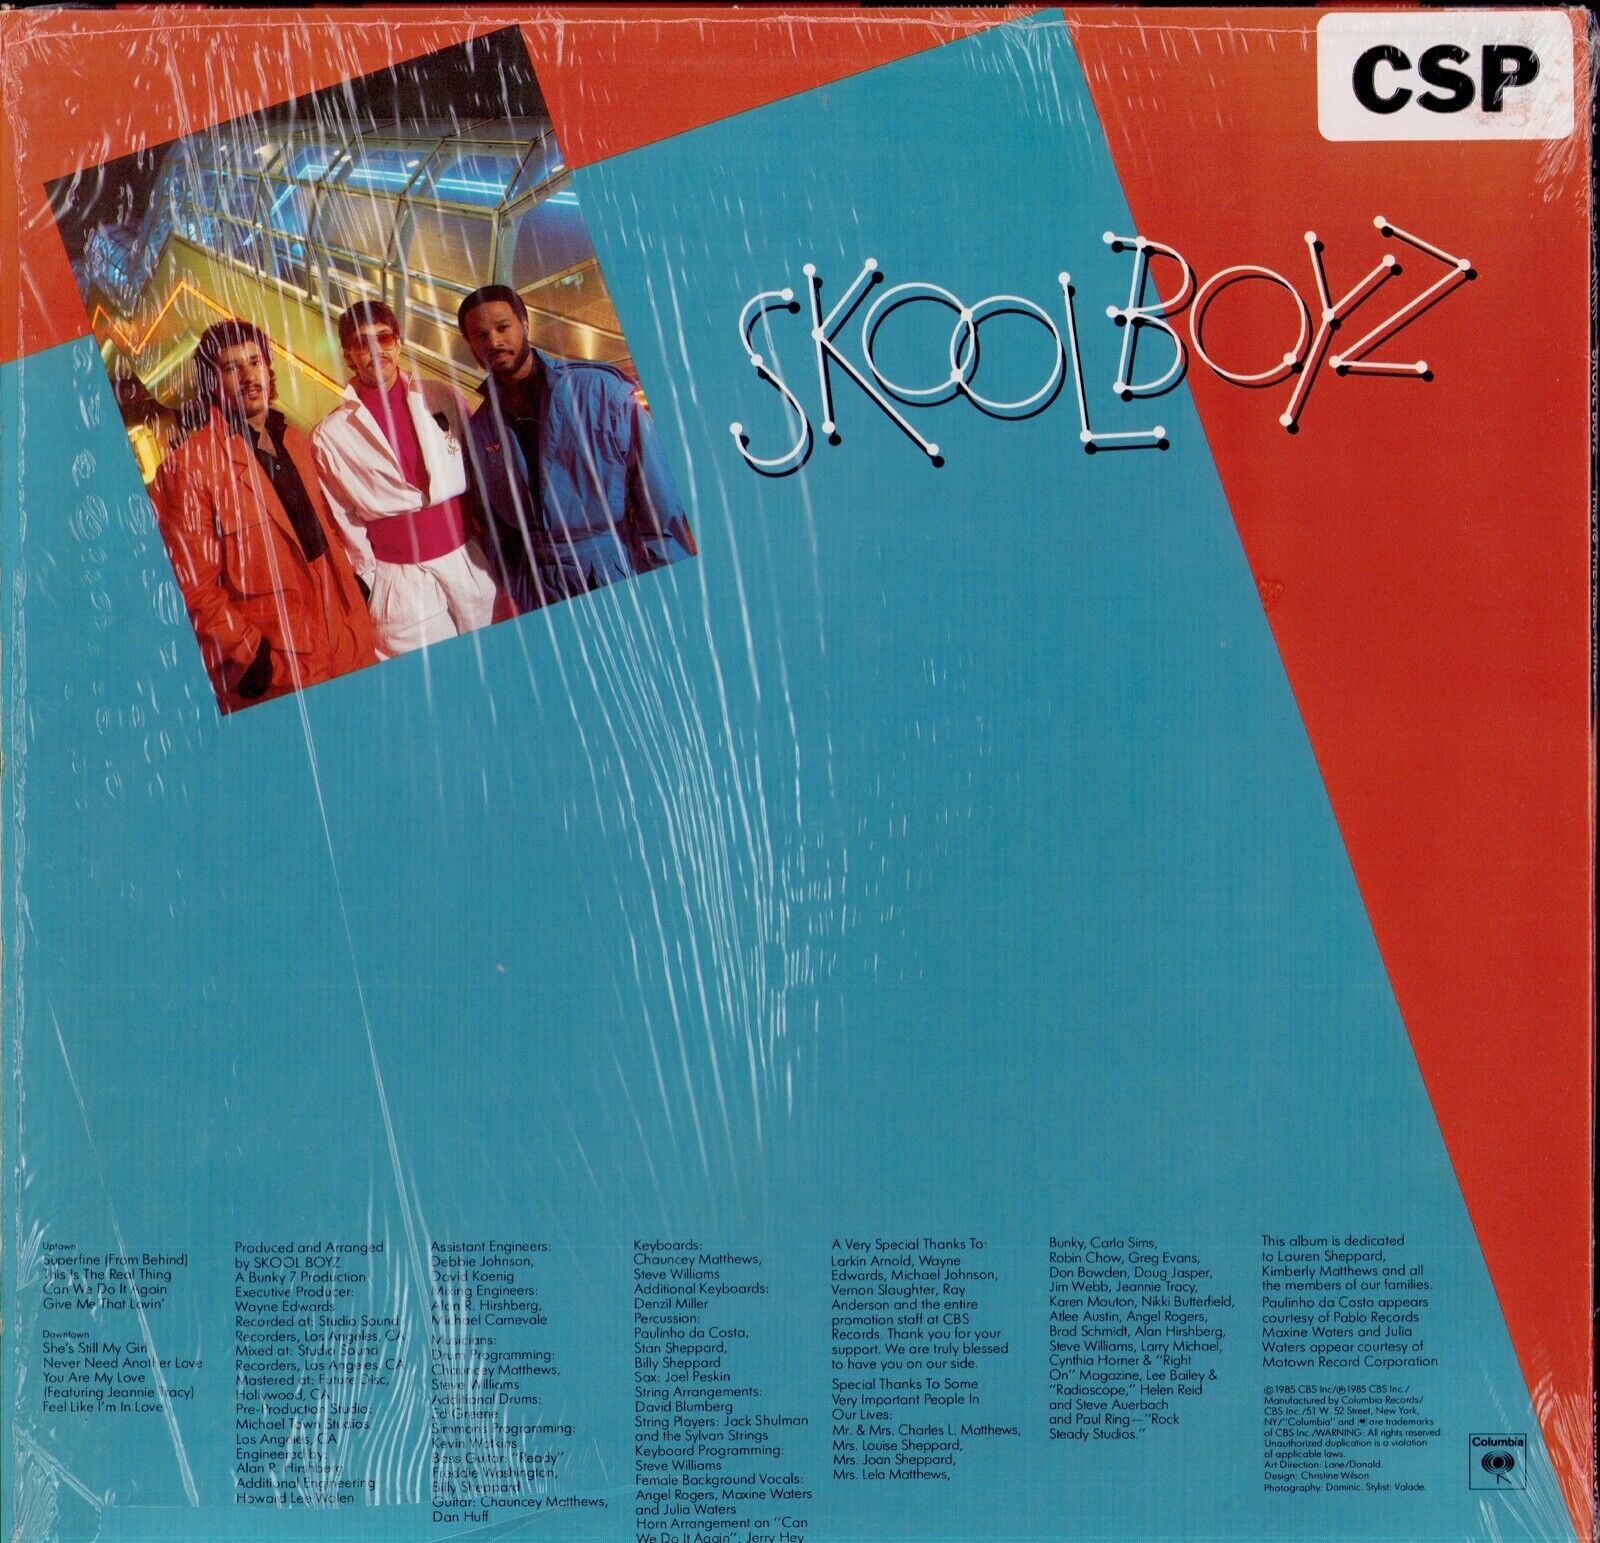 Skool Boyz - This Is The Real Thing Vinyl LP